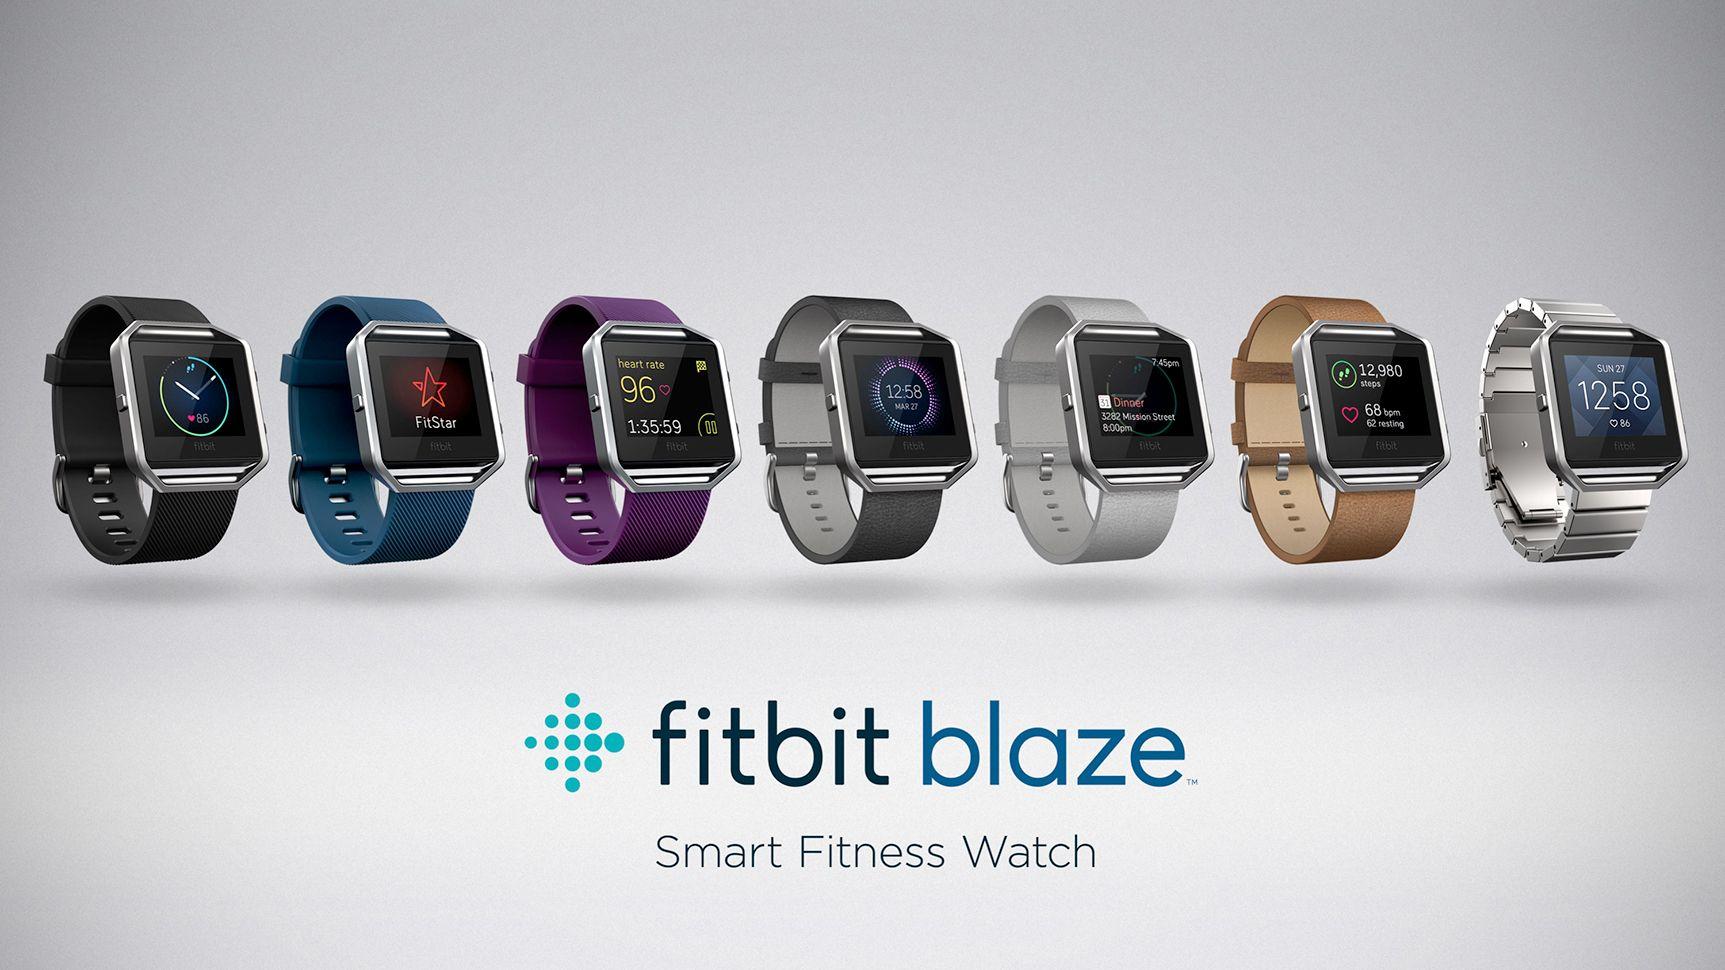 Fitbit unveils new 'Blaze' fitness smartwatches